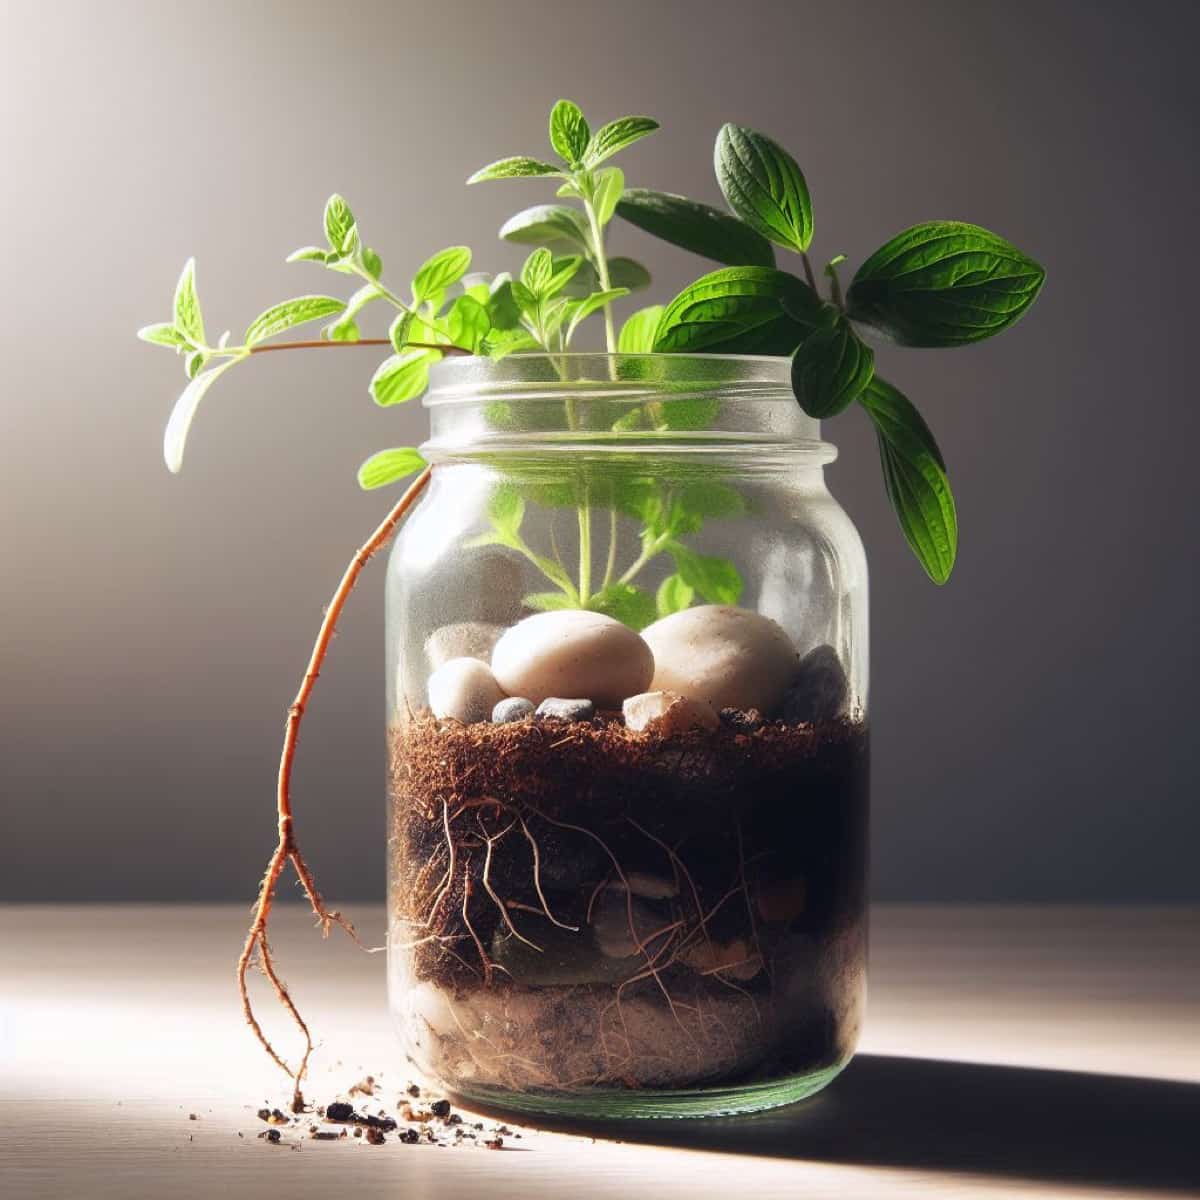 Plant in a jar